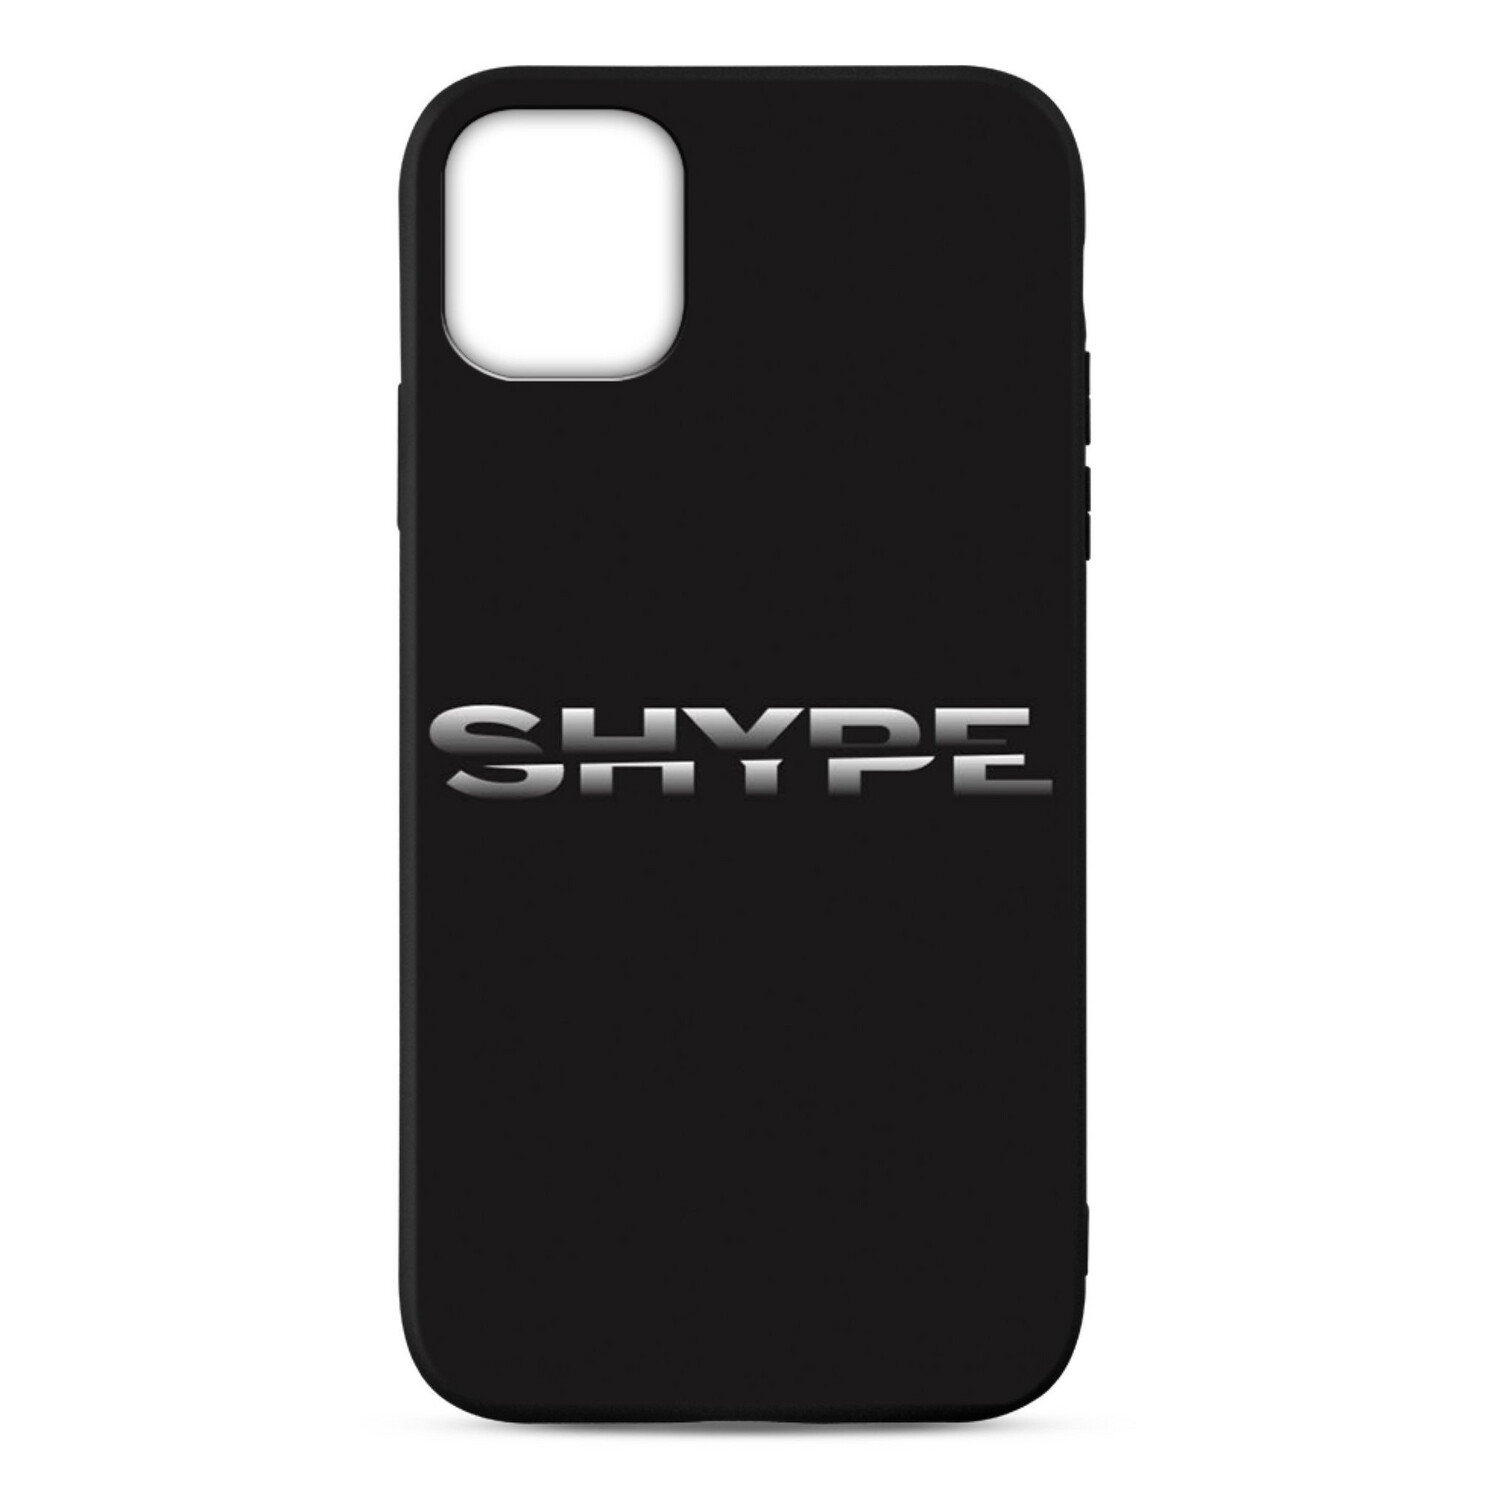 Shype Phone Case - Black